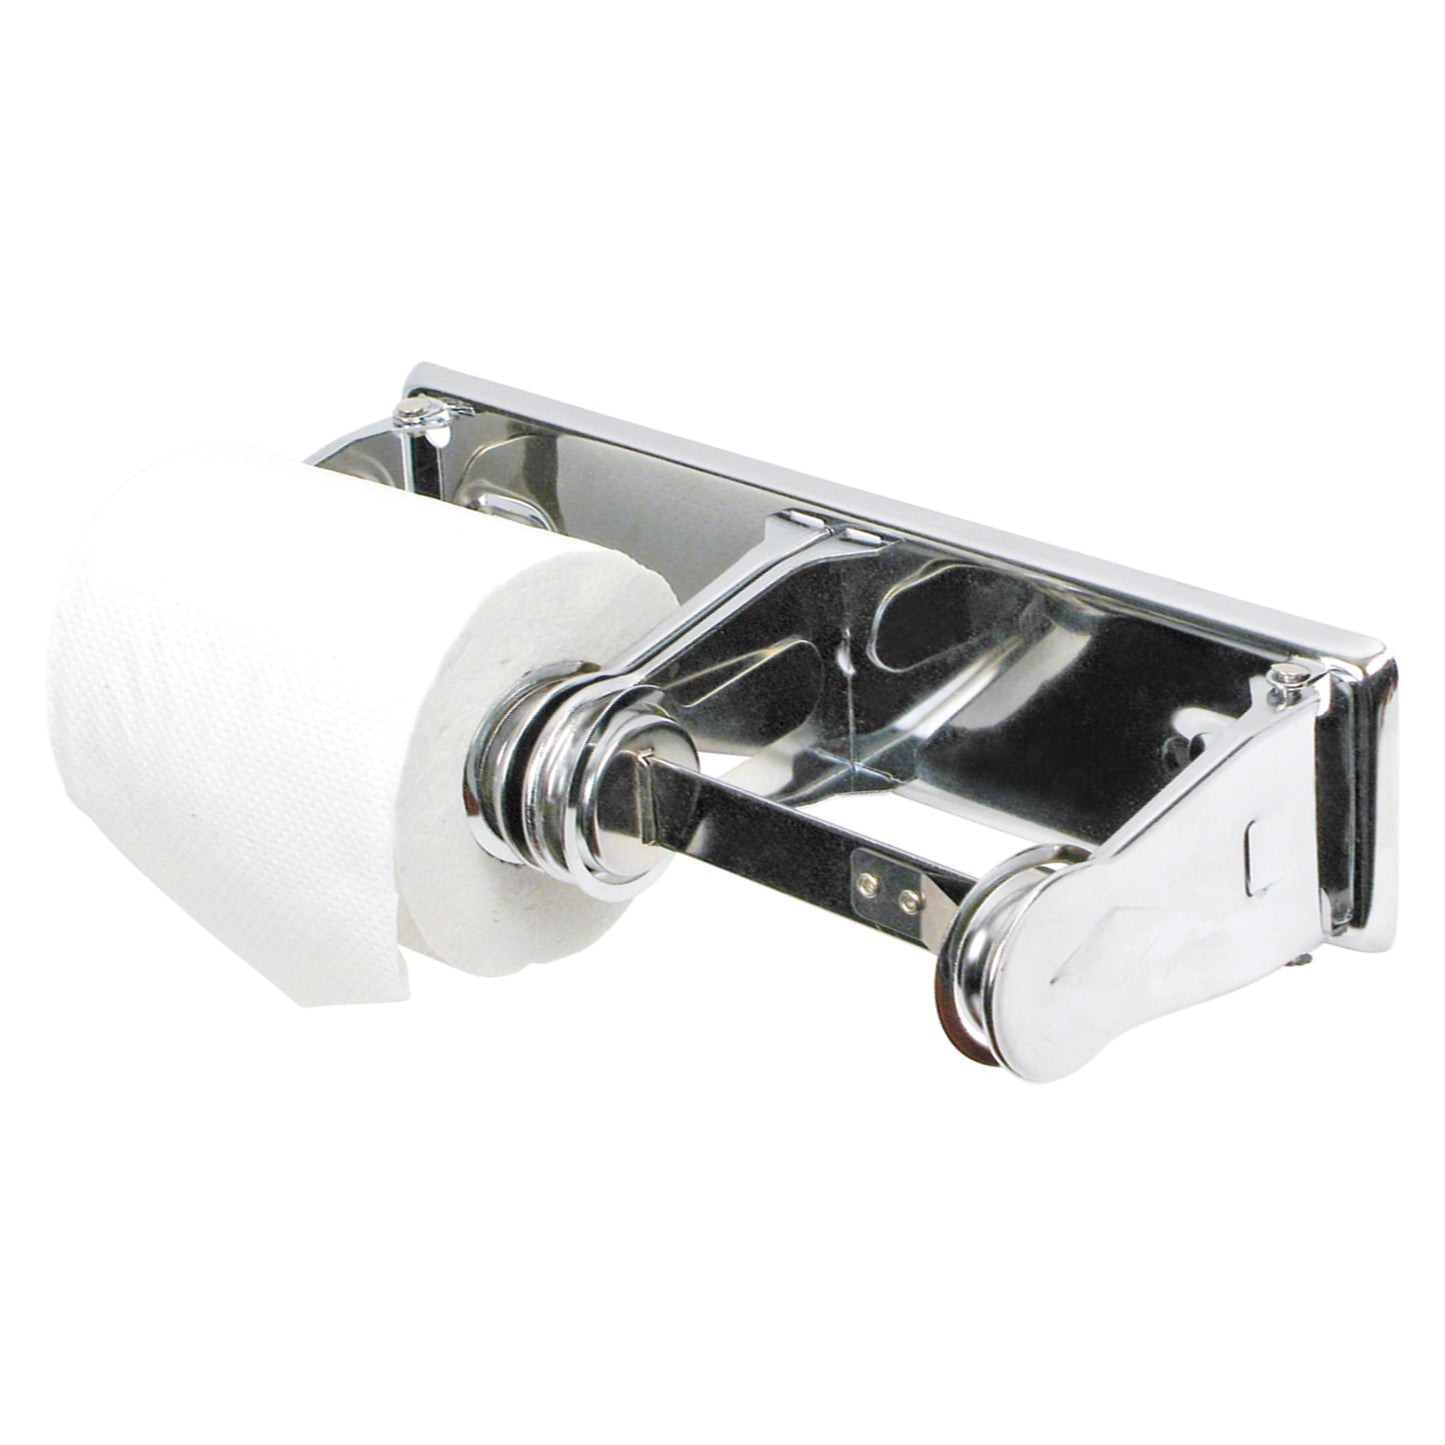 TTH-2 - Toilet Tissue Holder, Double Roll, Chrome Plated